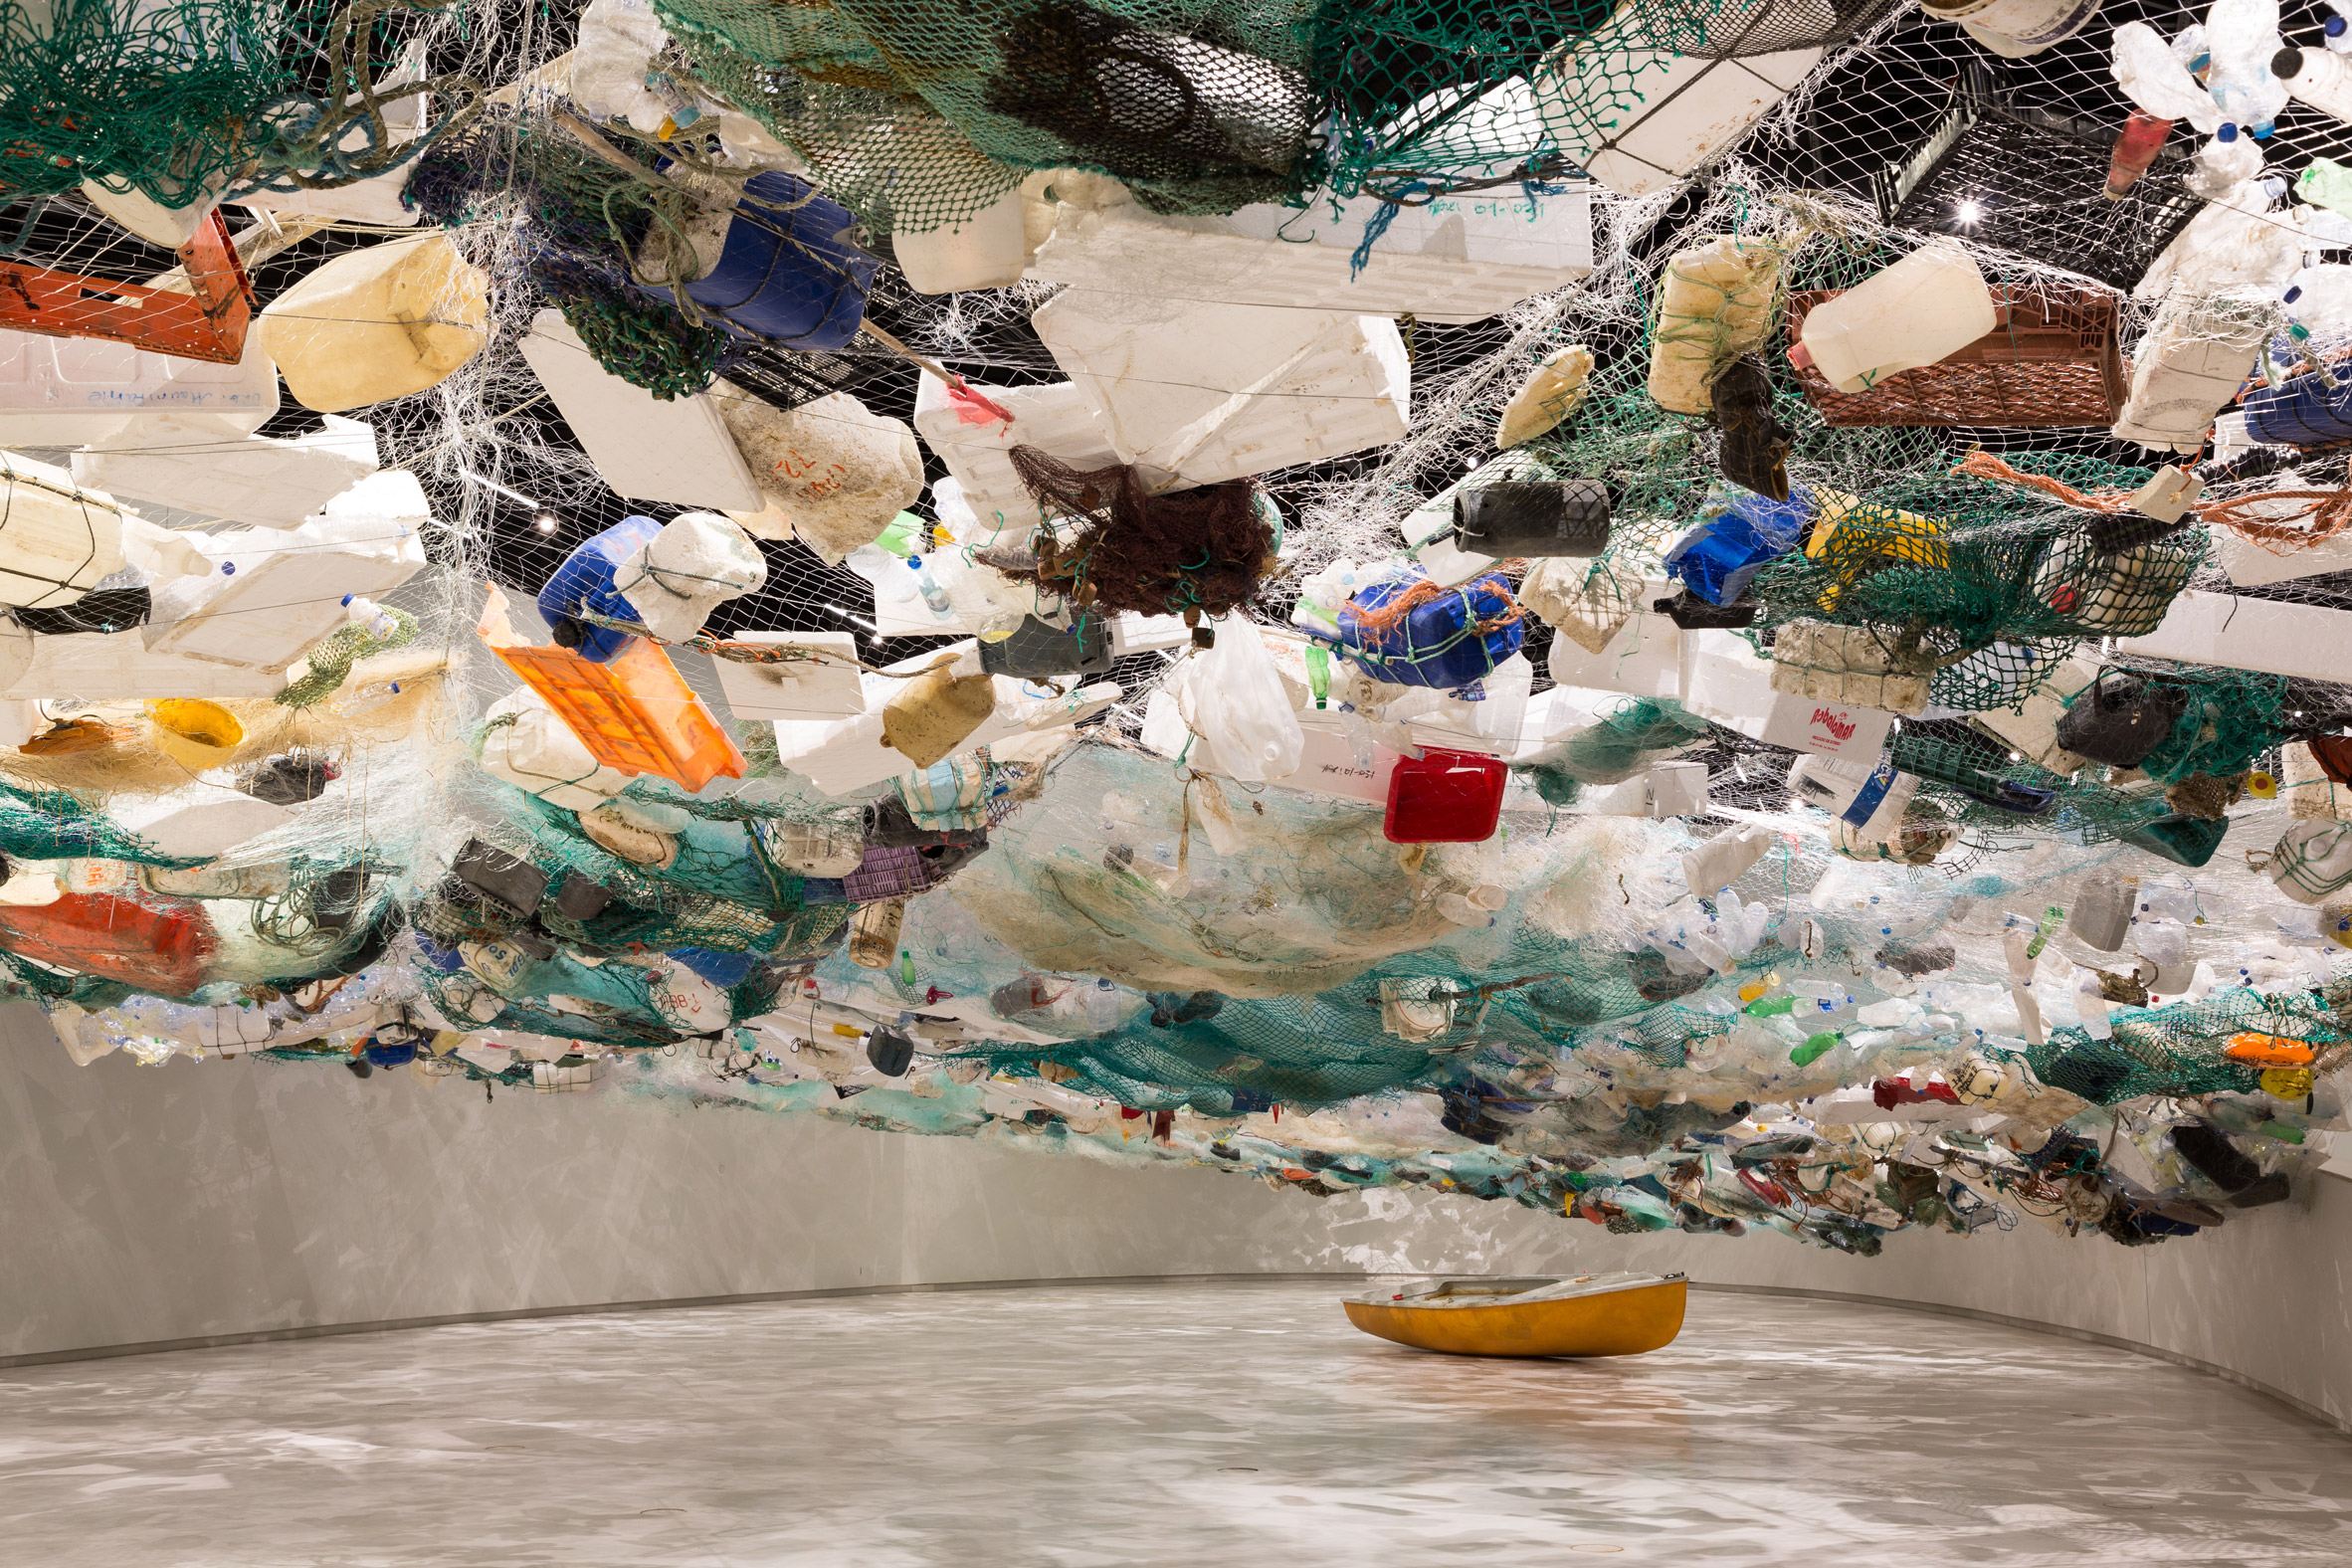 Tadashi Kawamata fills Lisbon's MAAT with plastic to warn about ocean debris